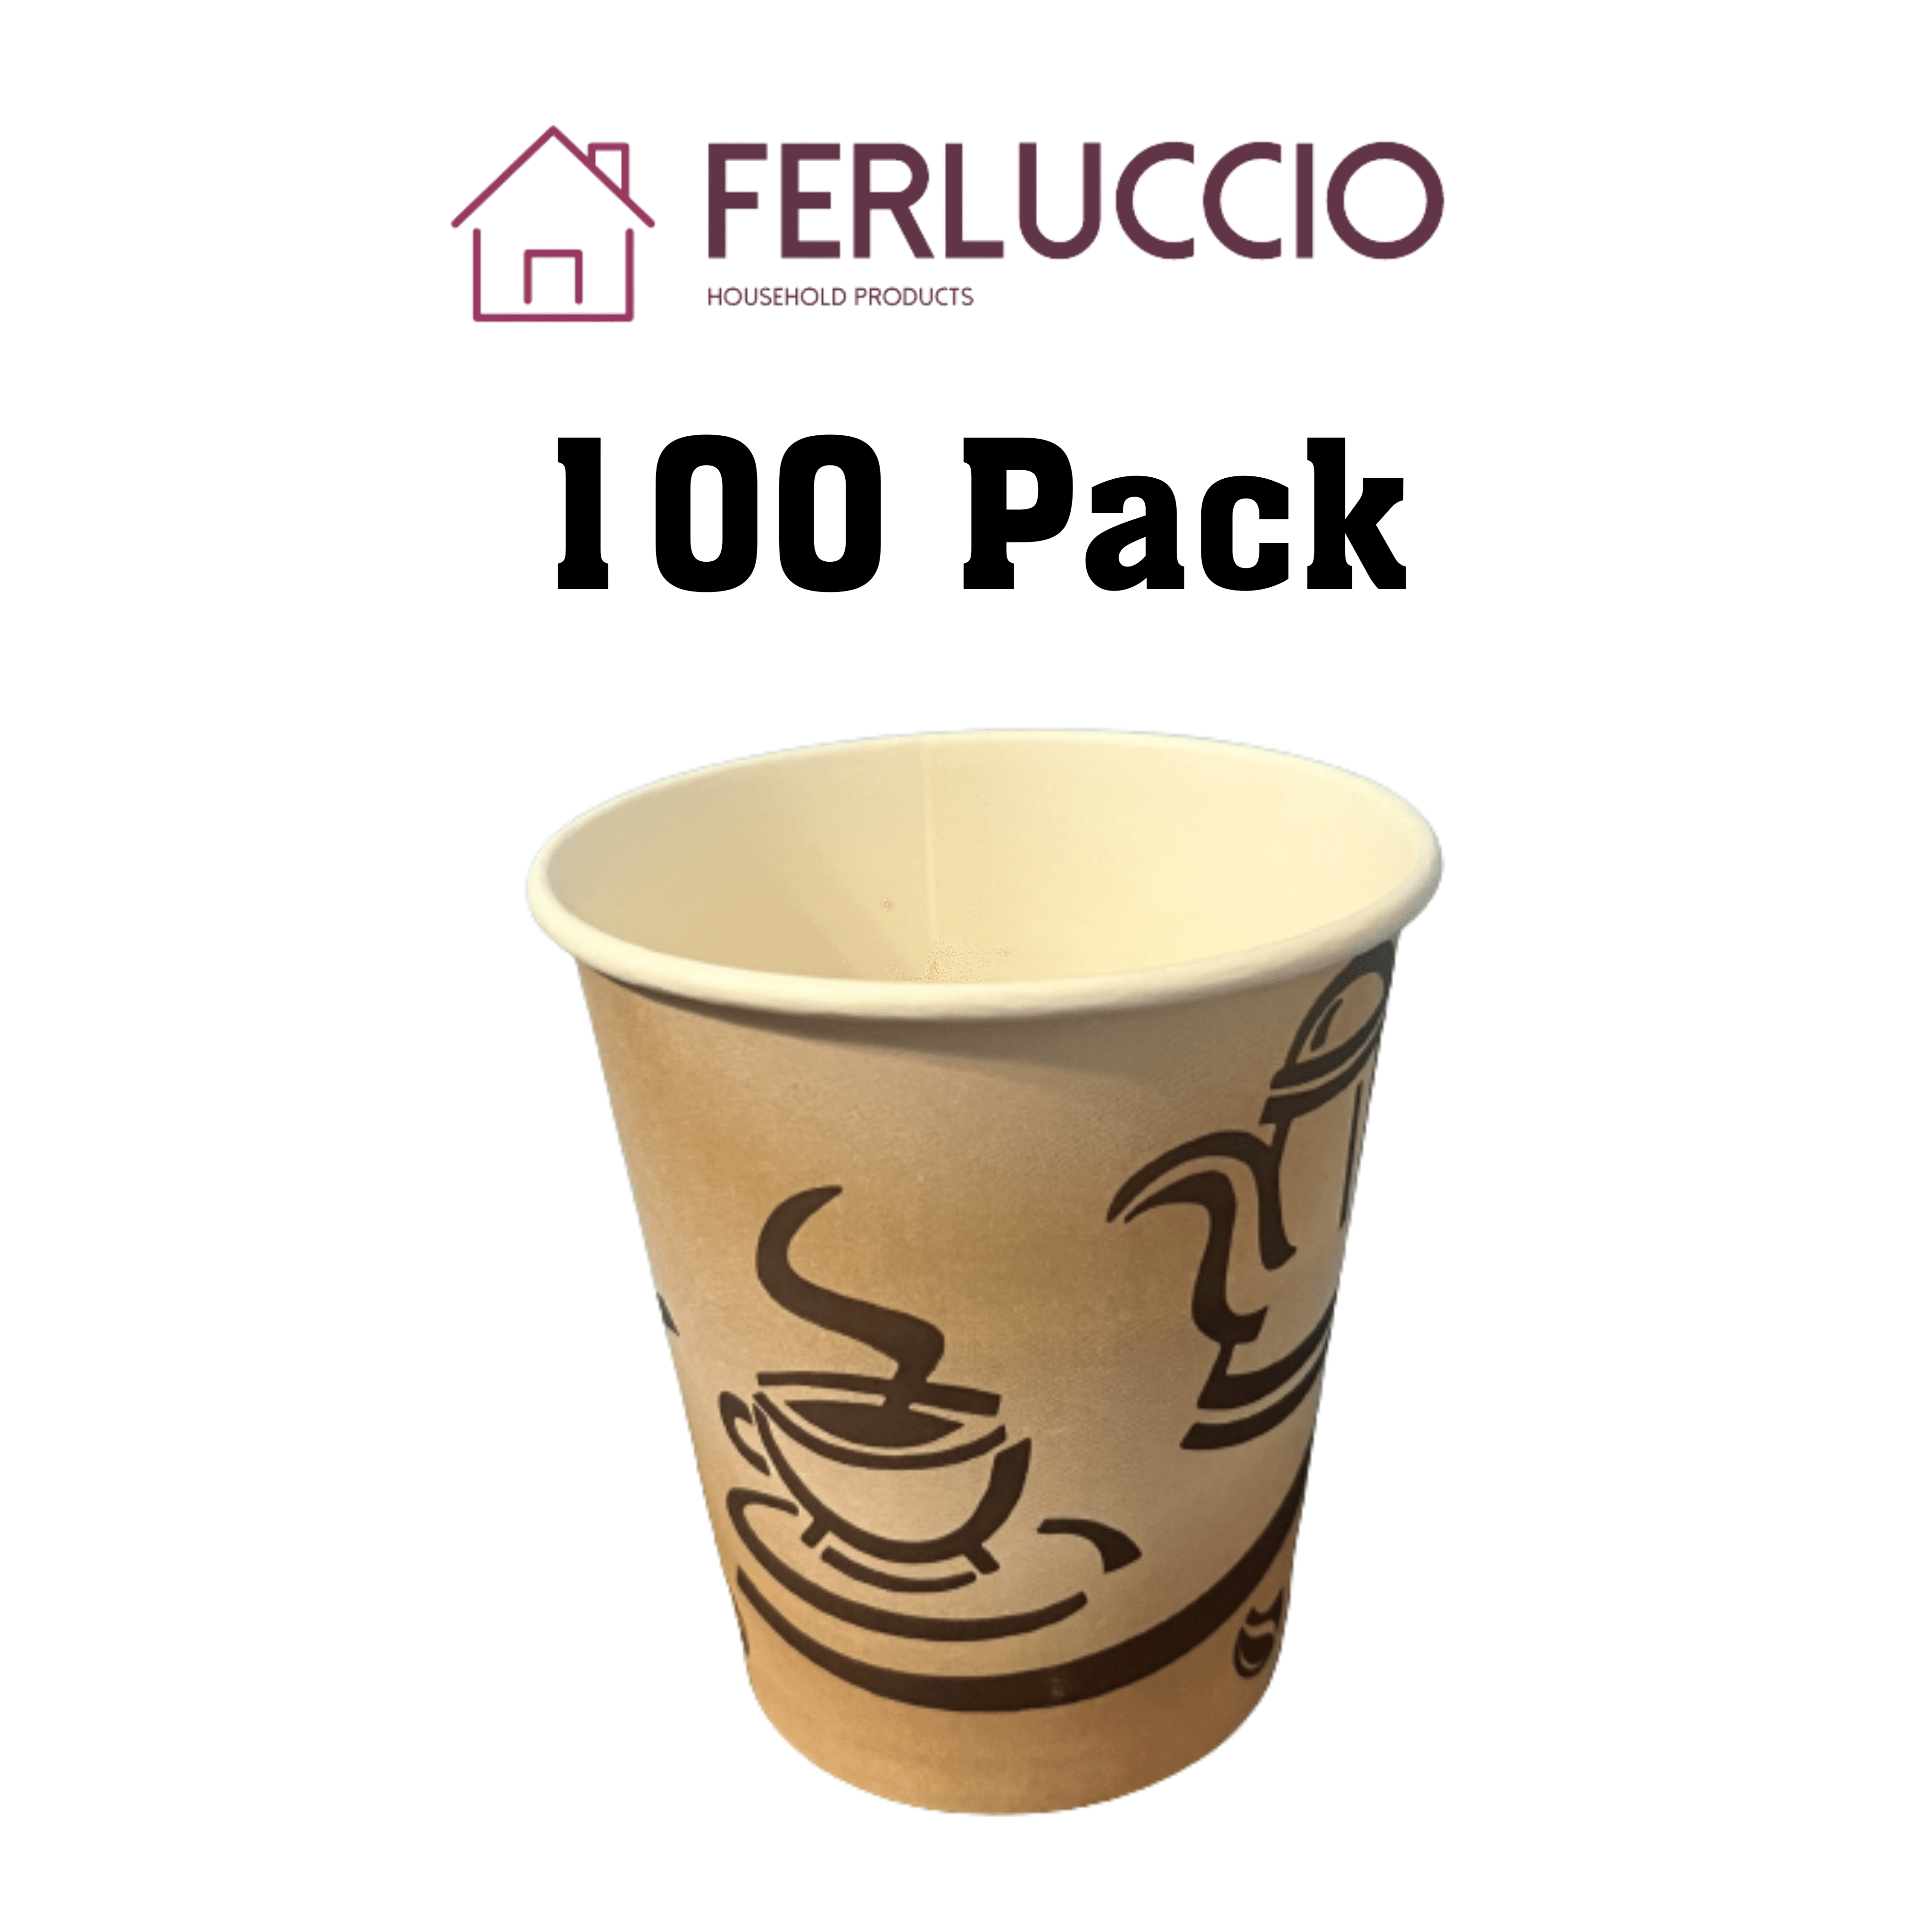 Ferluccio Hot Paper Coffee/Tea Cups 10 oz